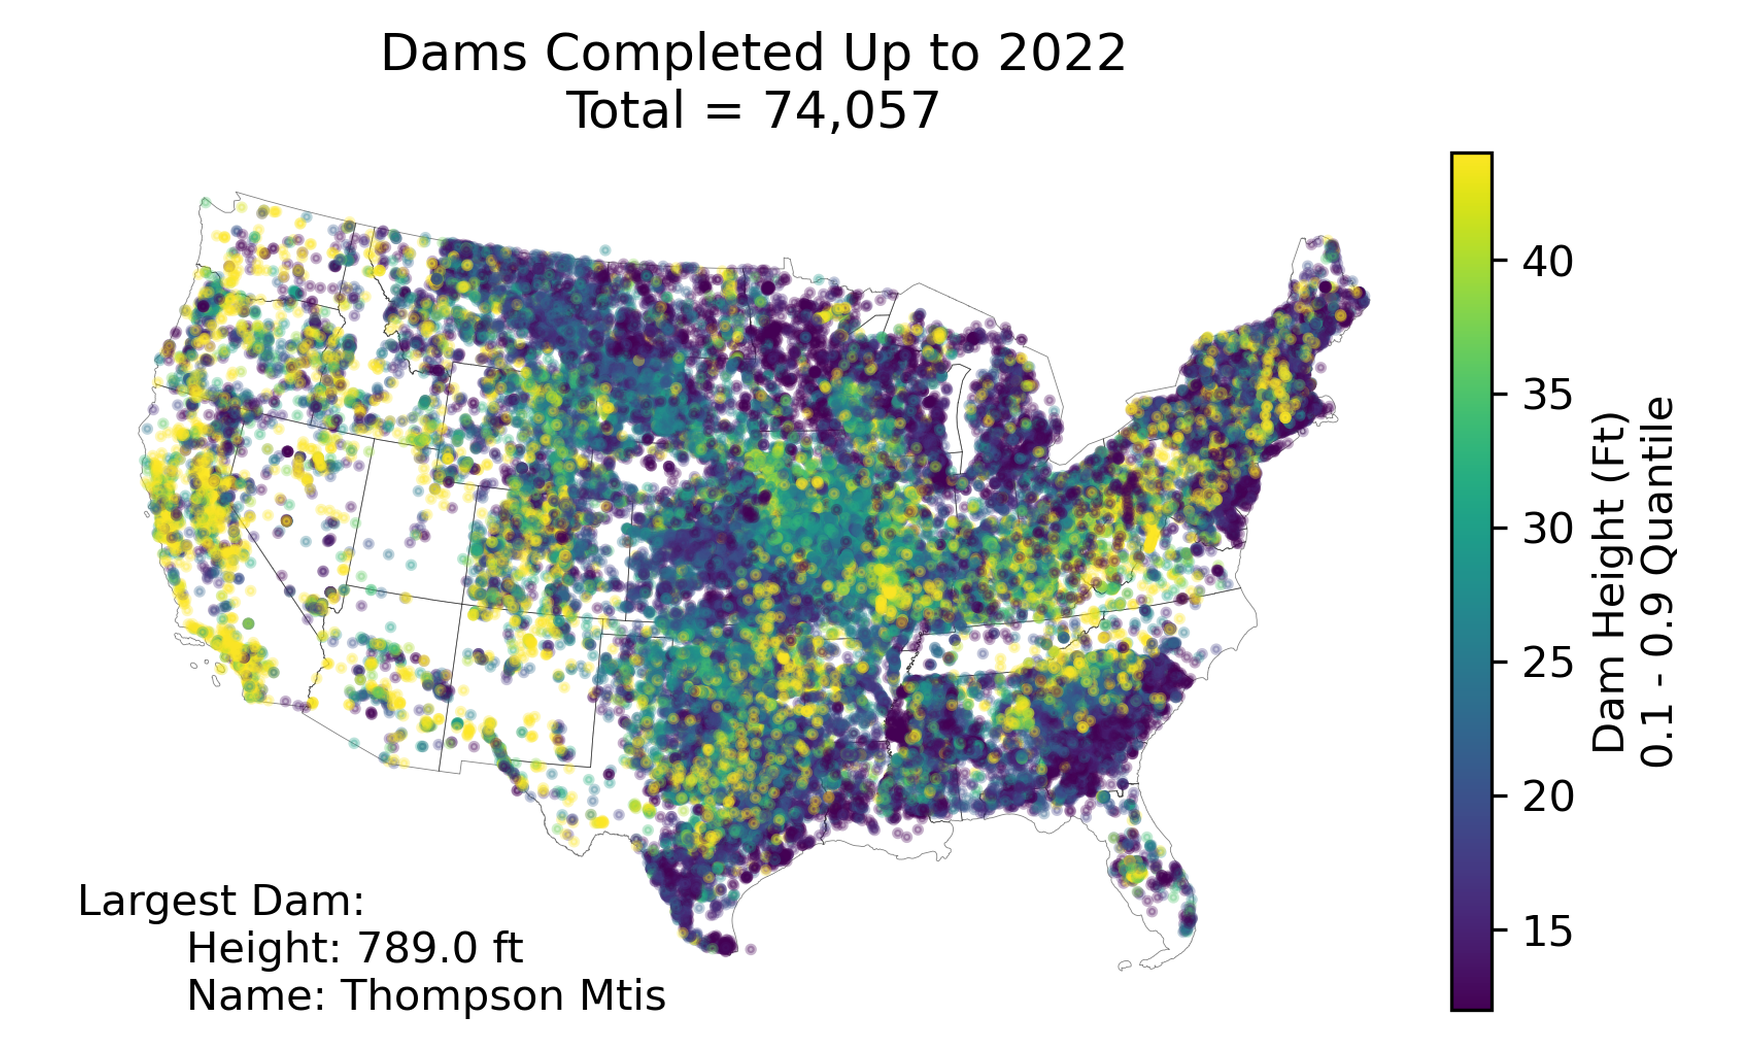 Spatiotemporal Distribution of Dams